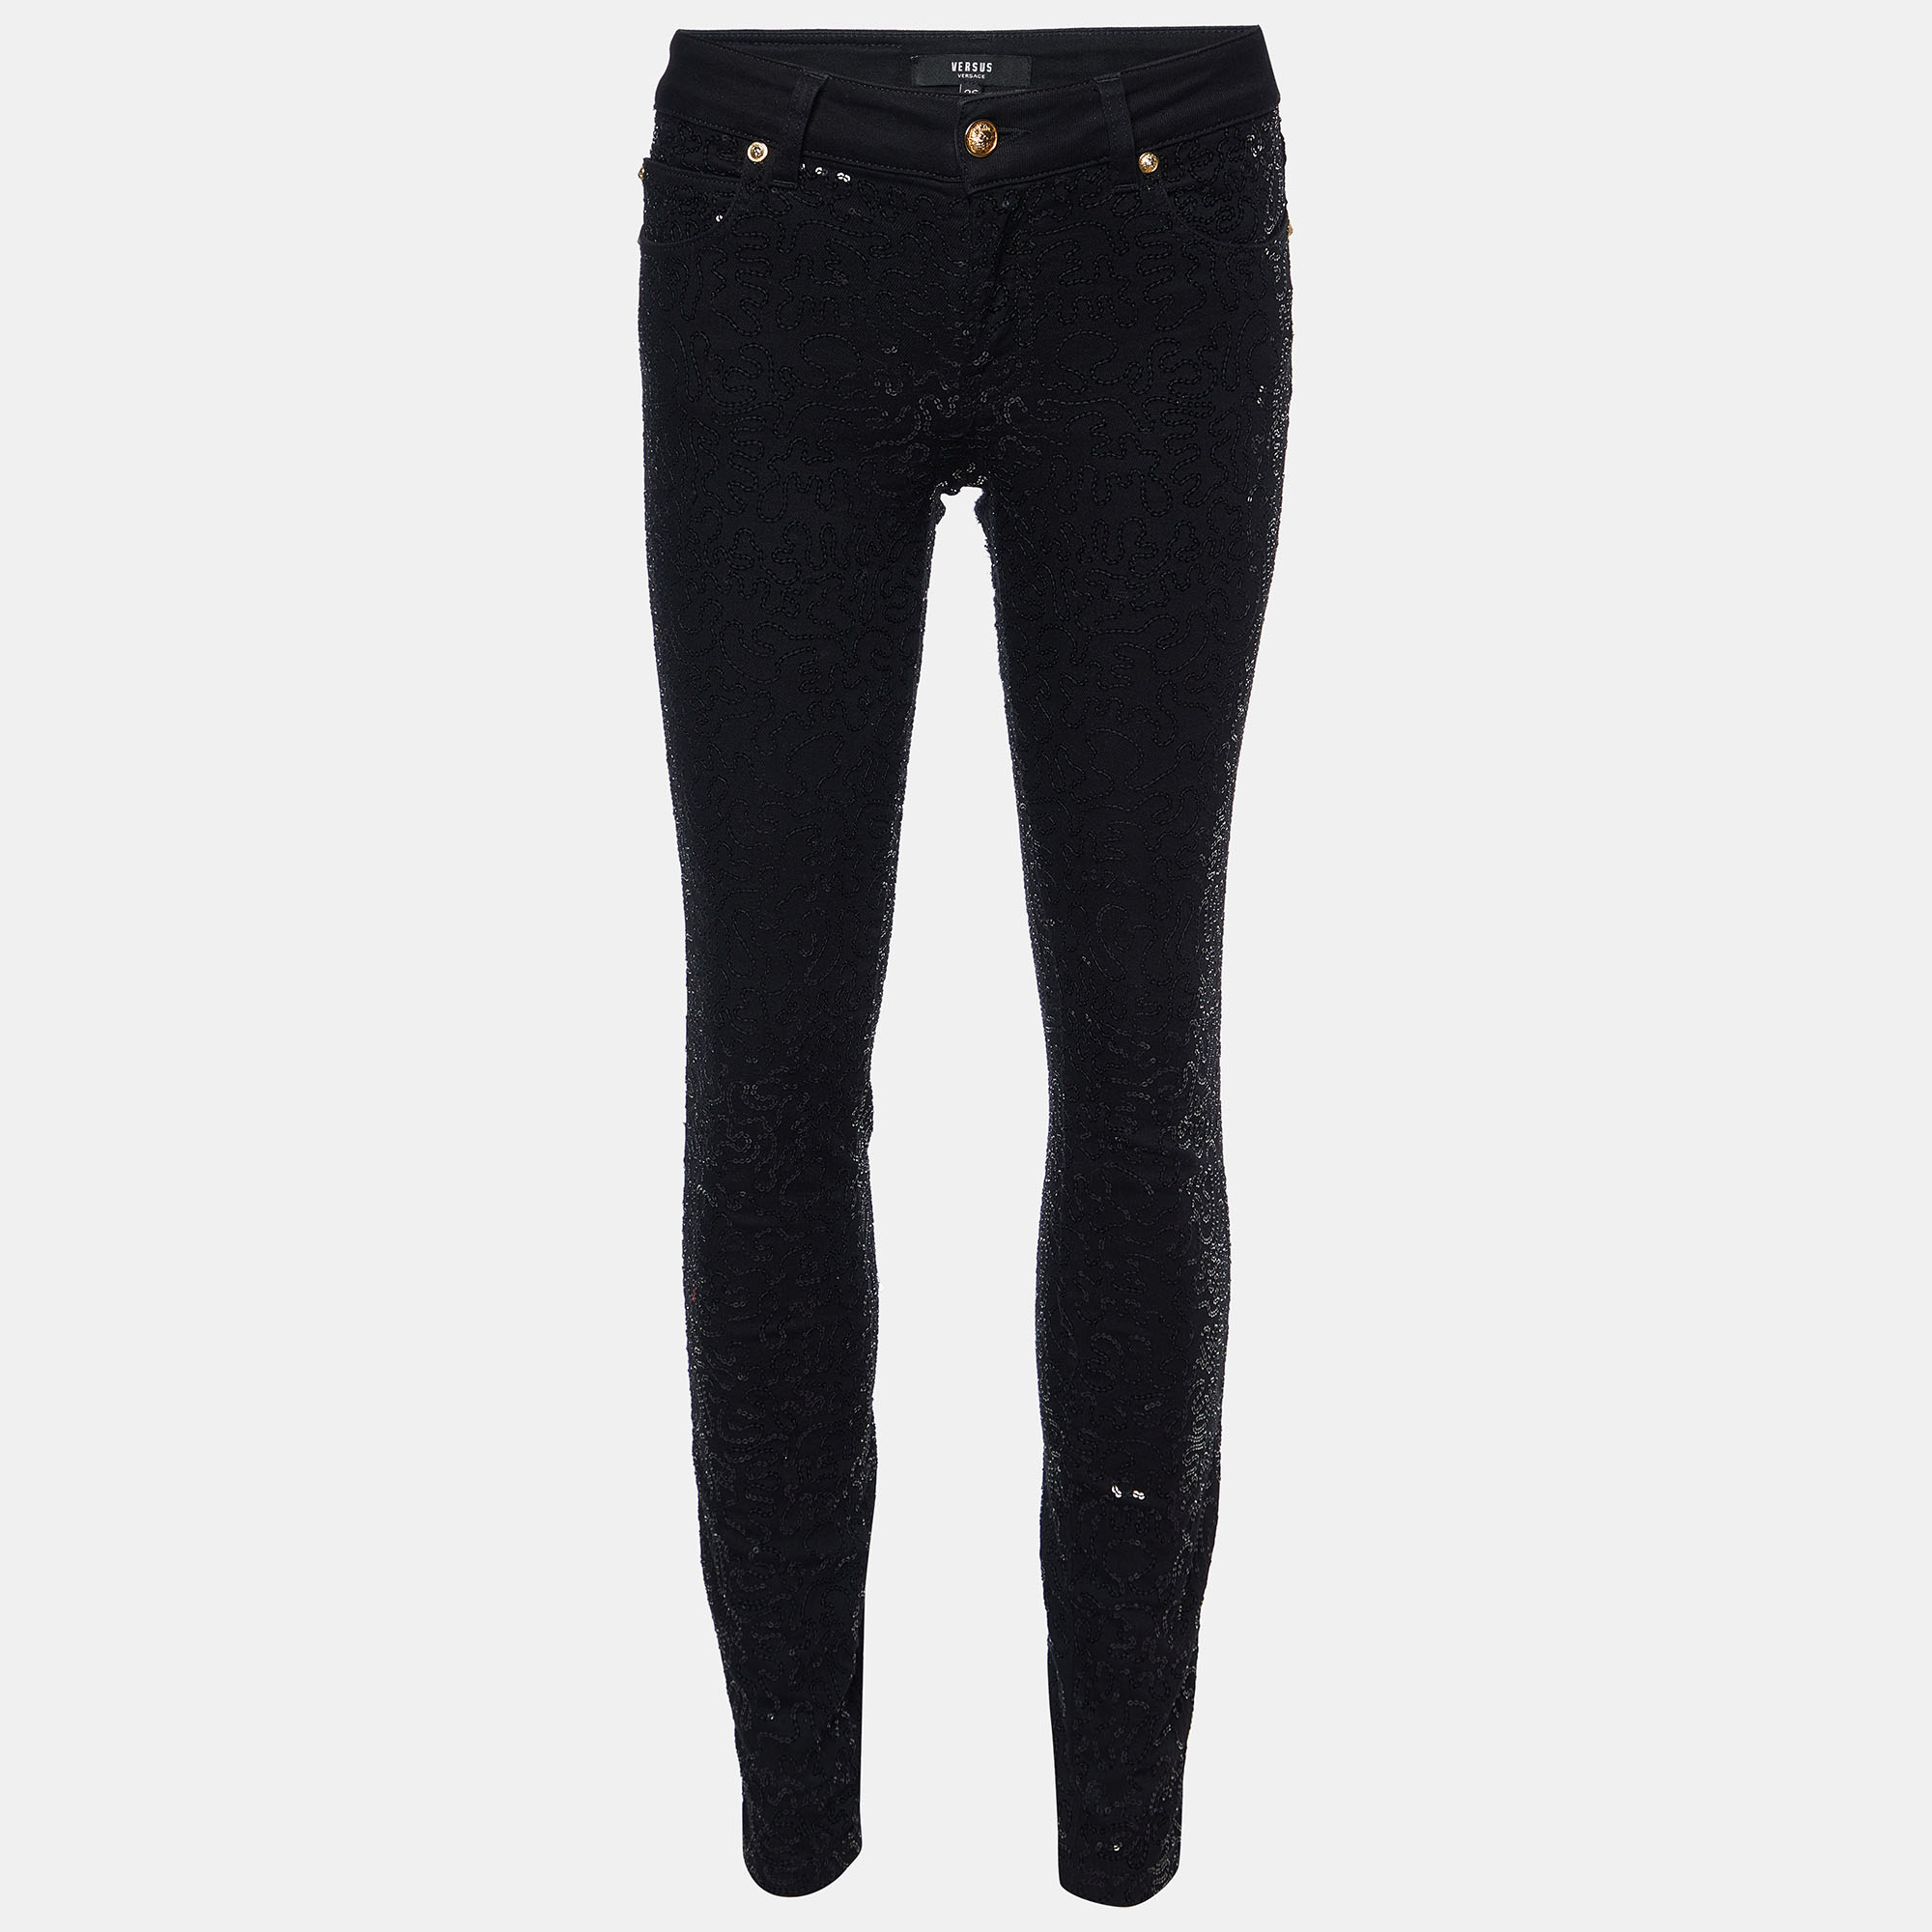 Versus versace black sequined denim skinny jeans s/waist 28"